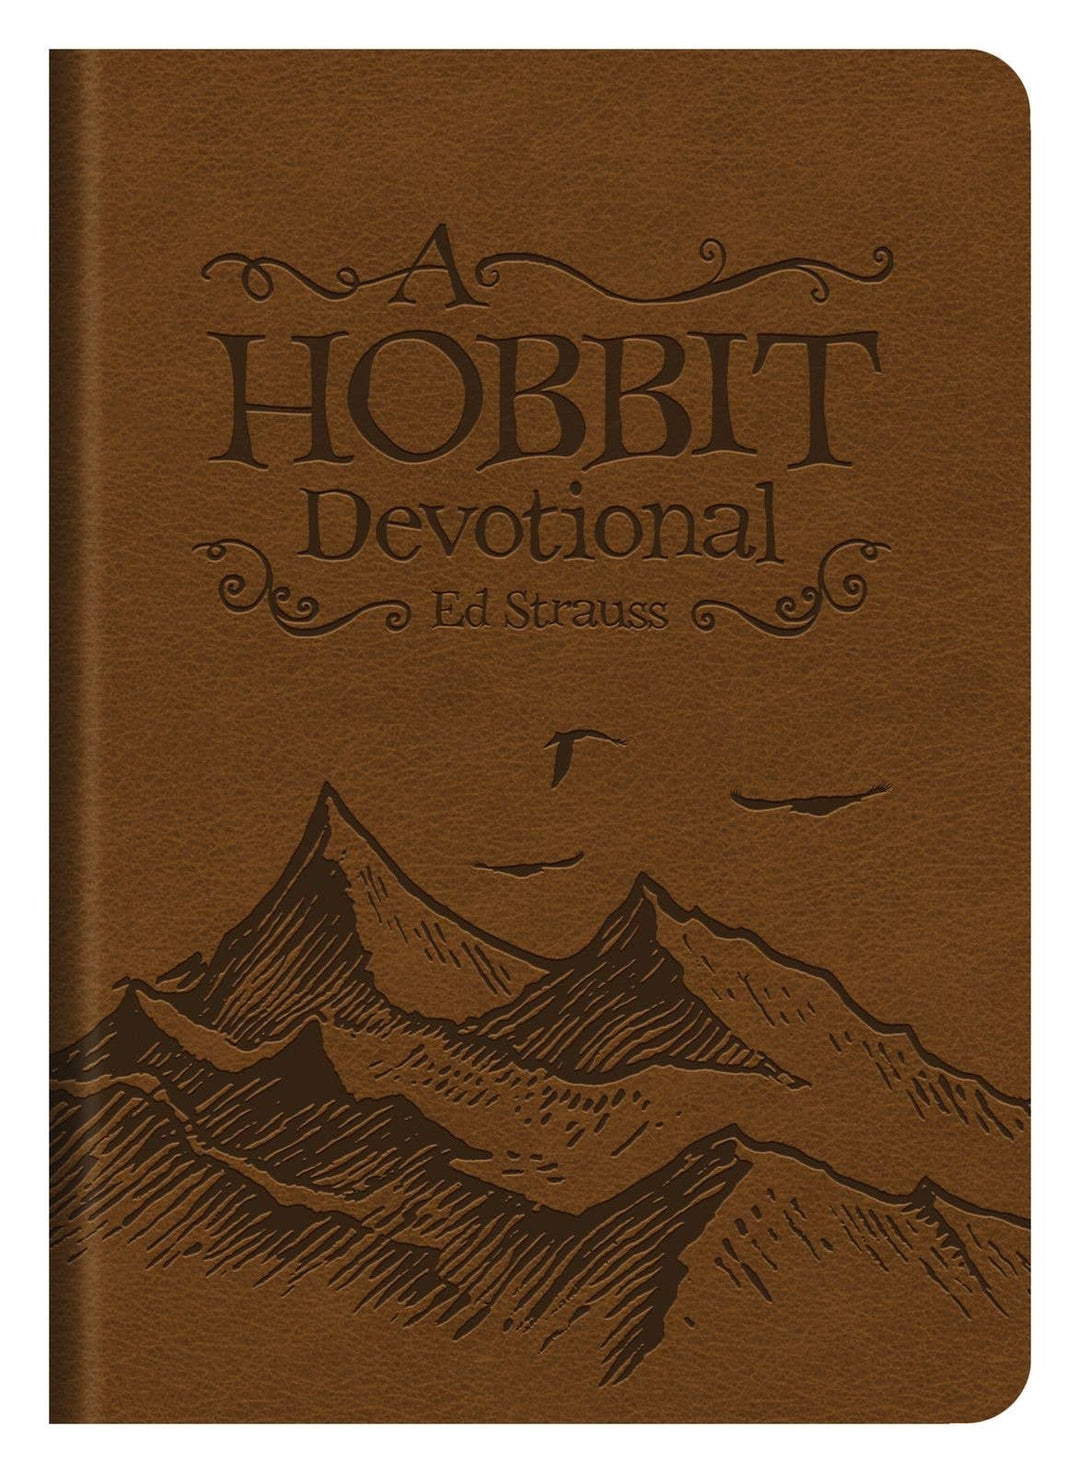 Hobbit Devotional - Premium Books and Devotionals from Barbour Publishing, Inc. - Just $15.99! Shop now at Pat's Monograms